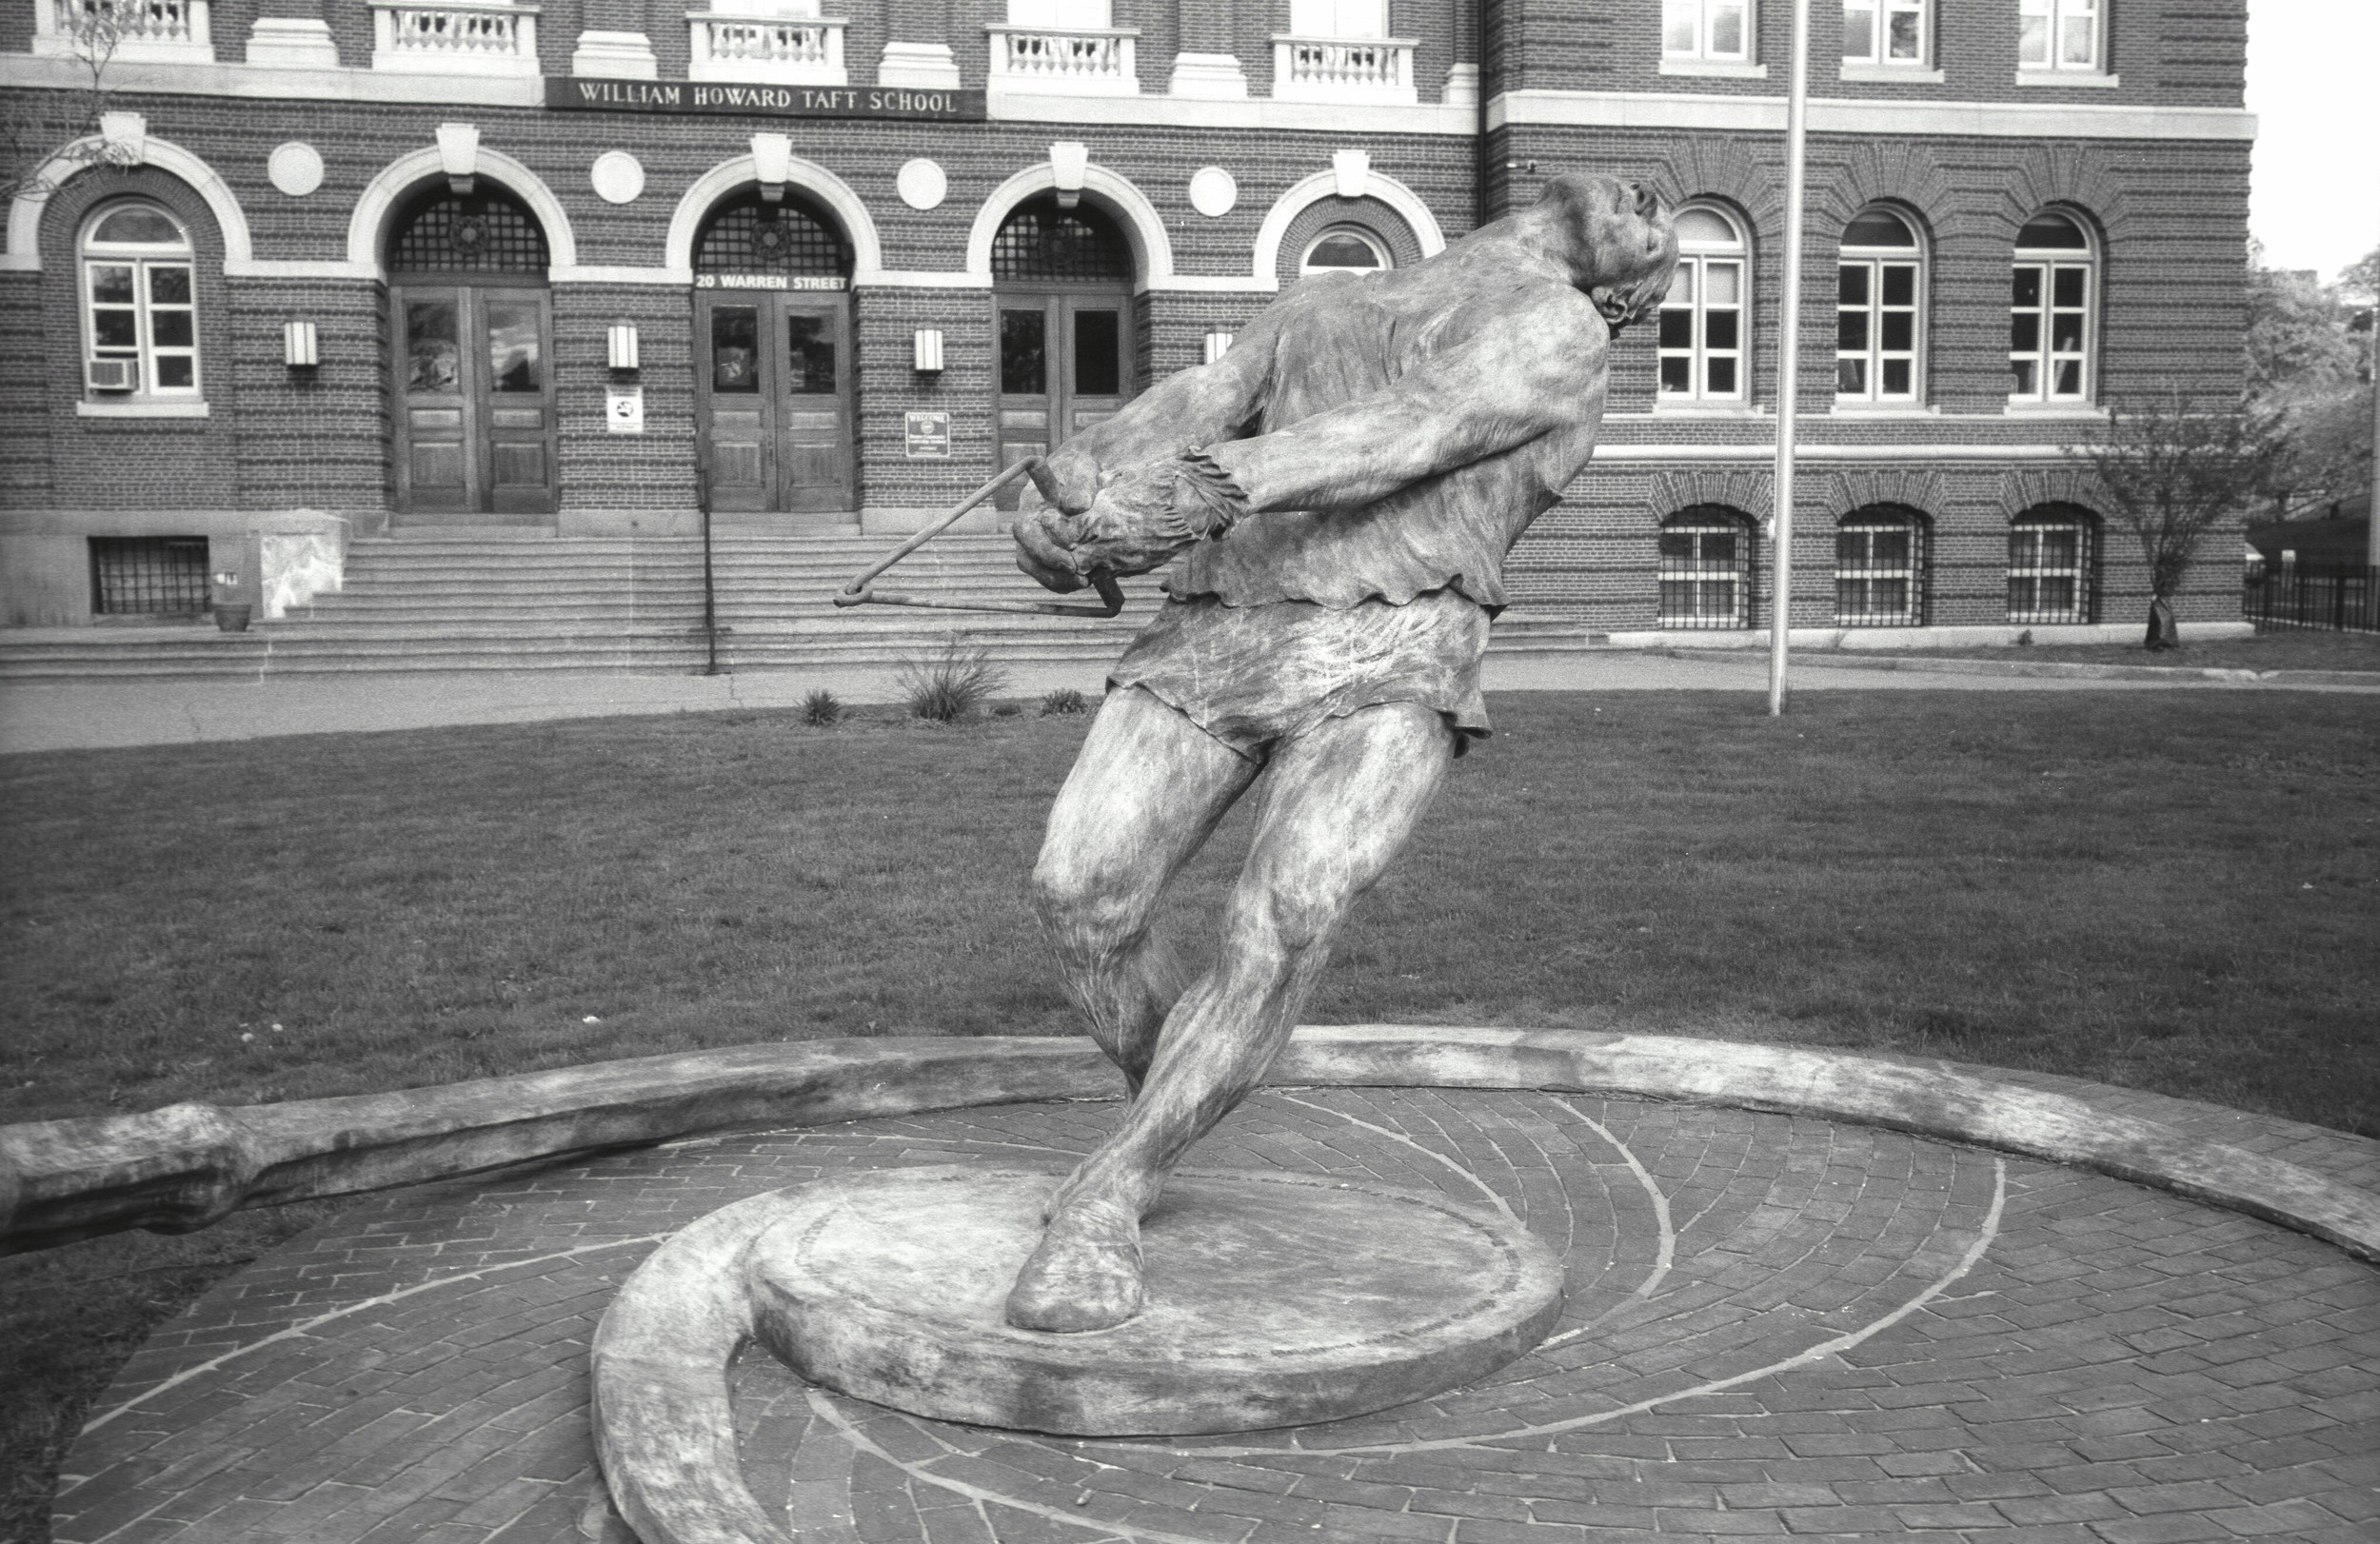 William Howard Taft School Statue.jpg